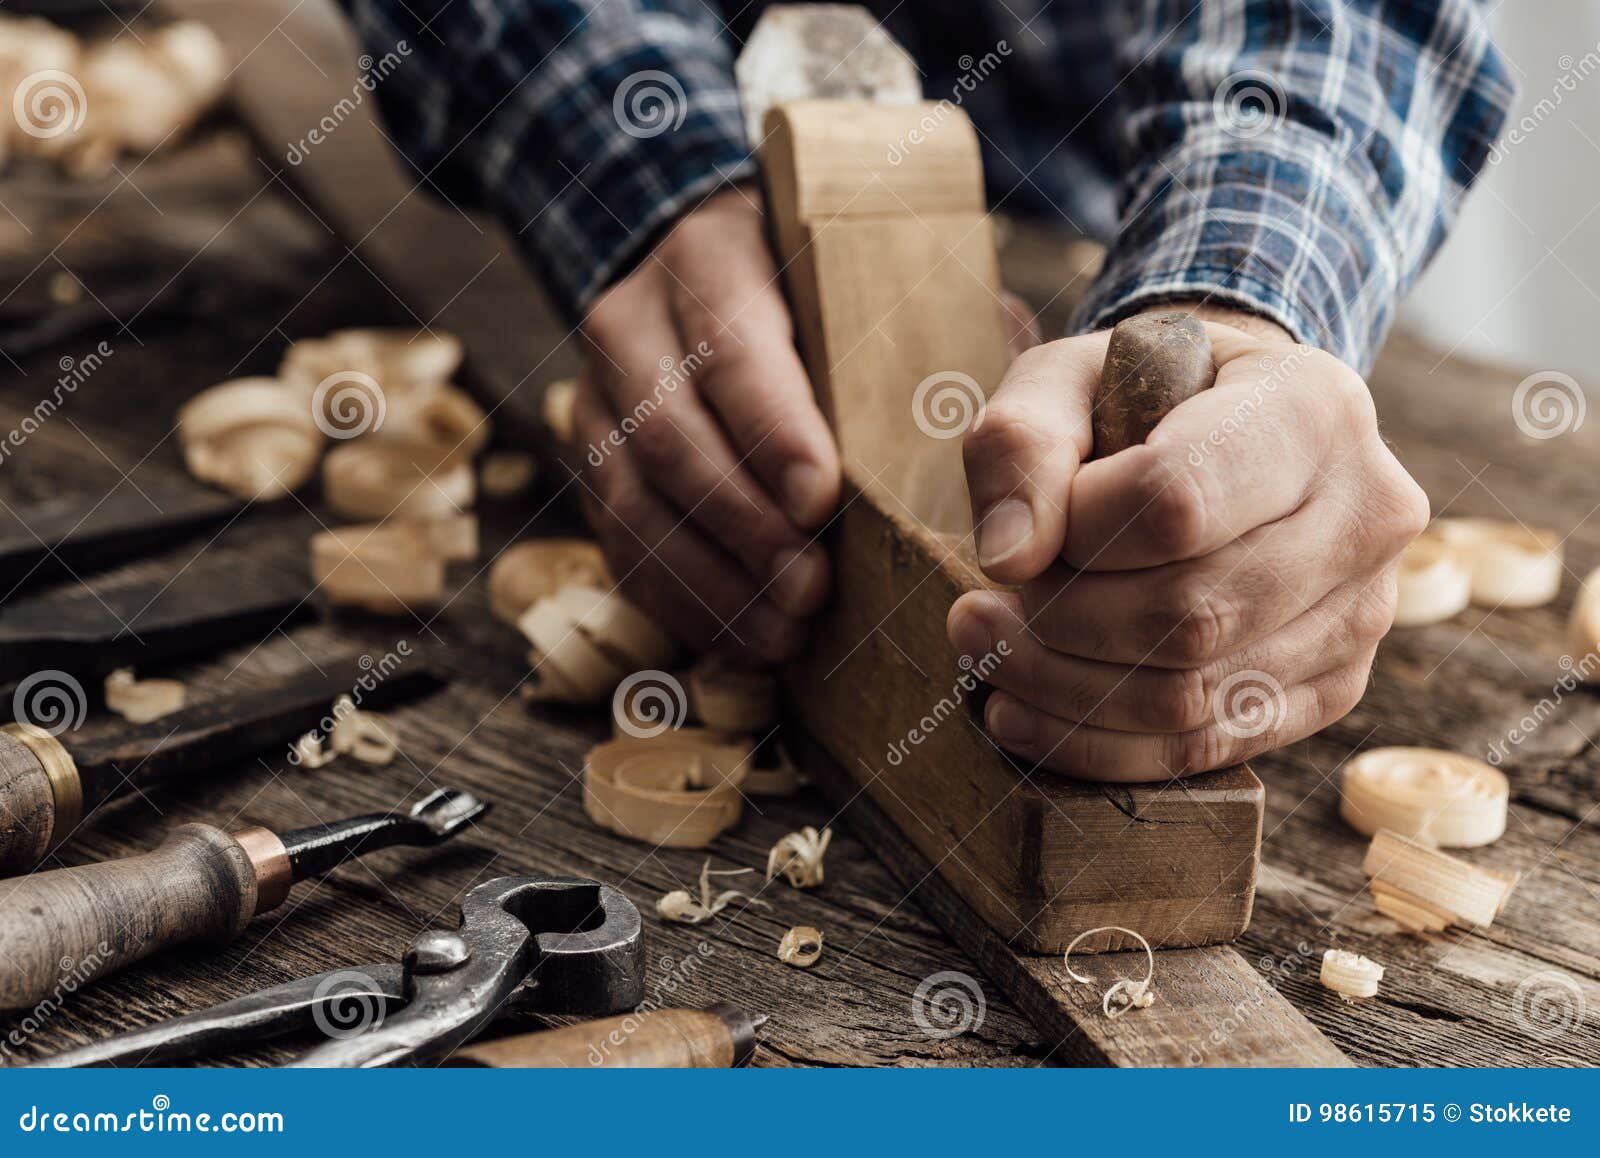 carpenter working